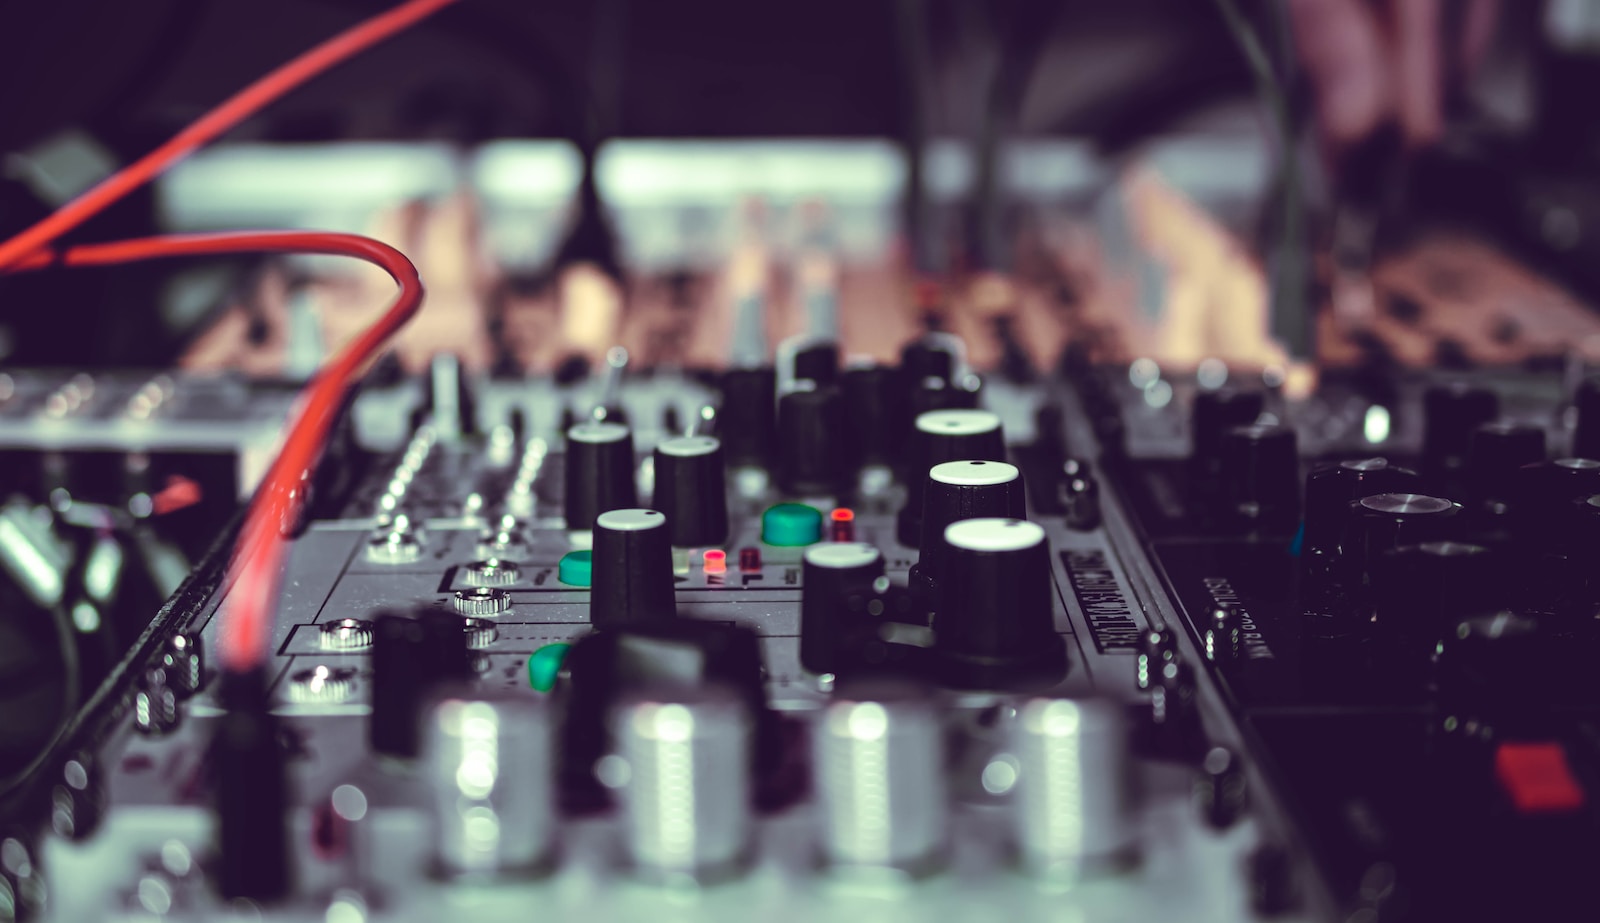 gray audio mixer close-up photo